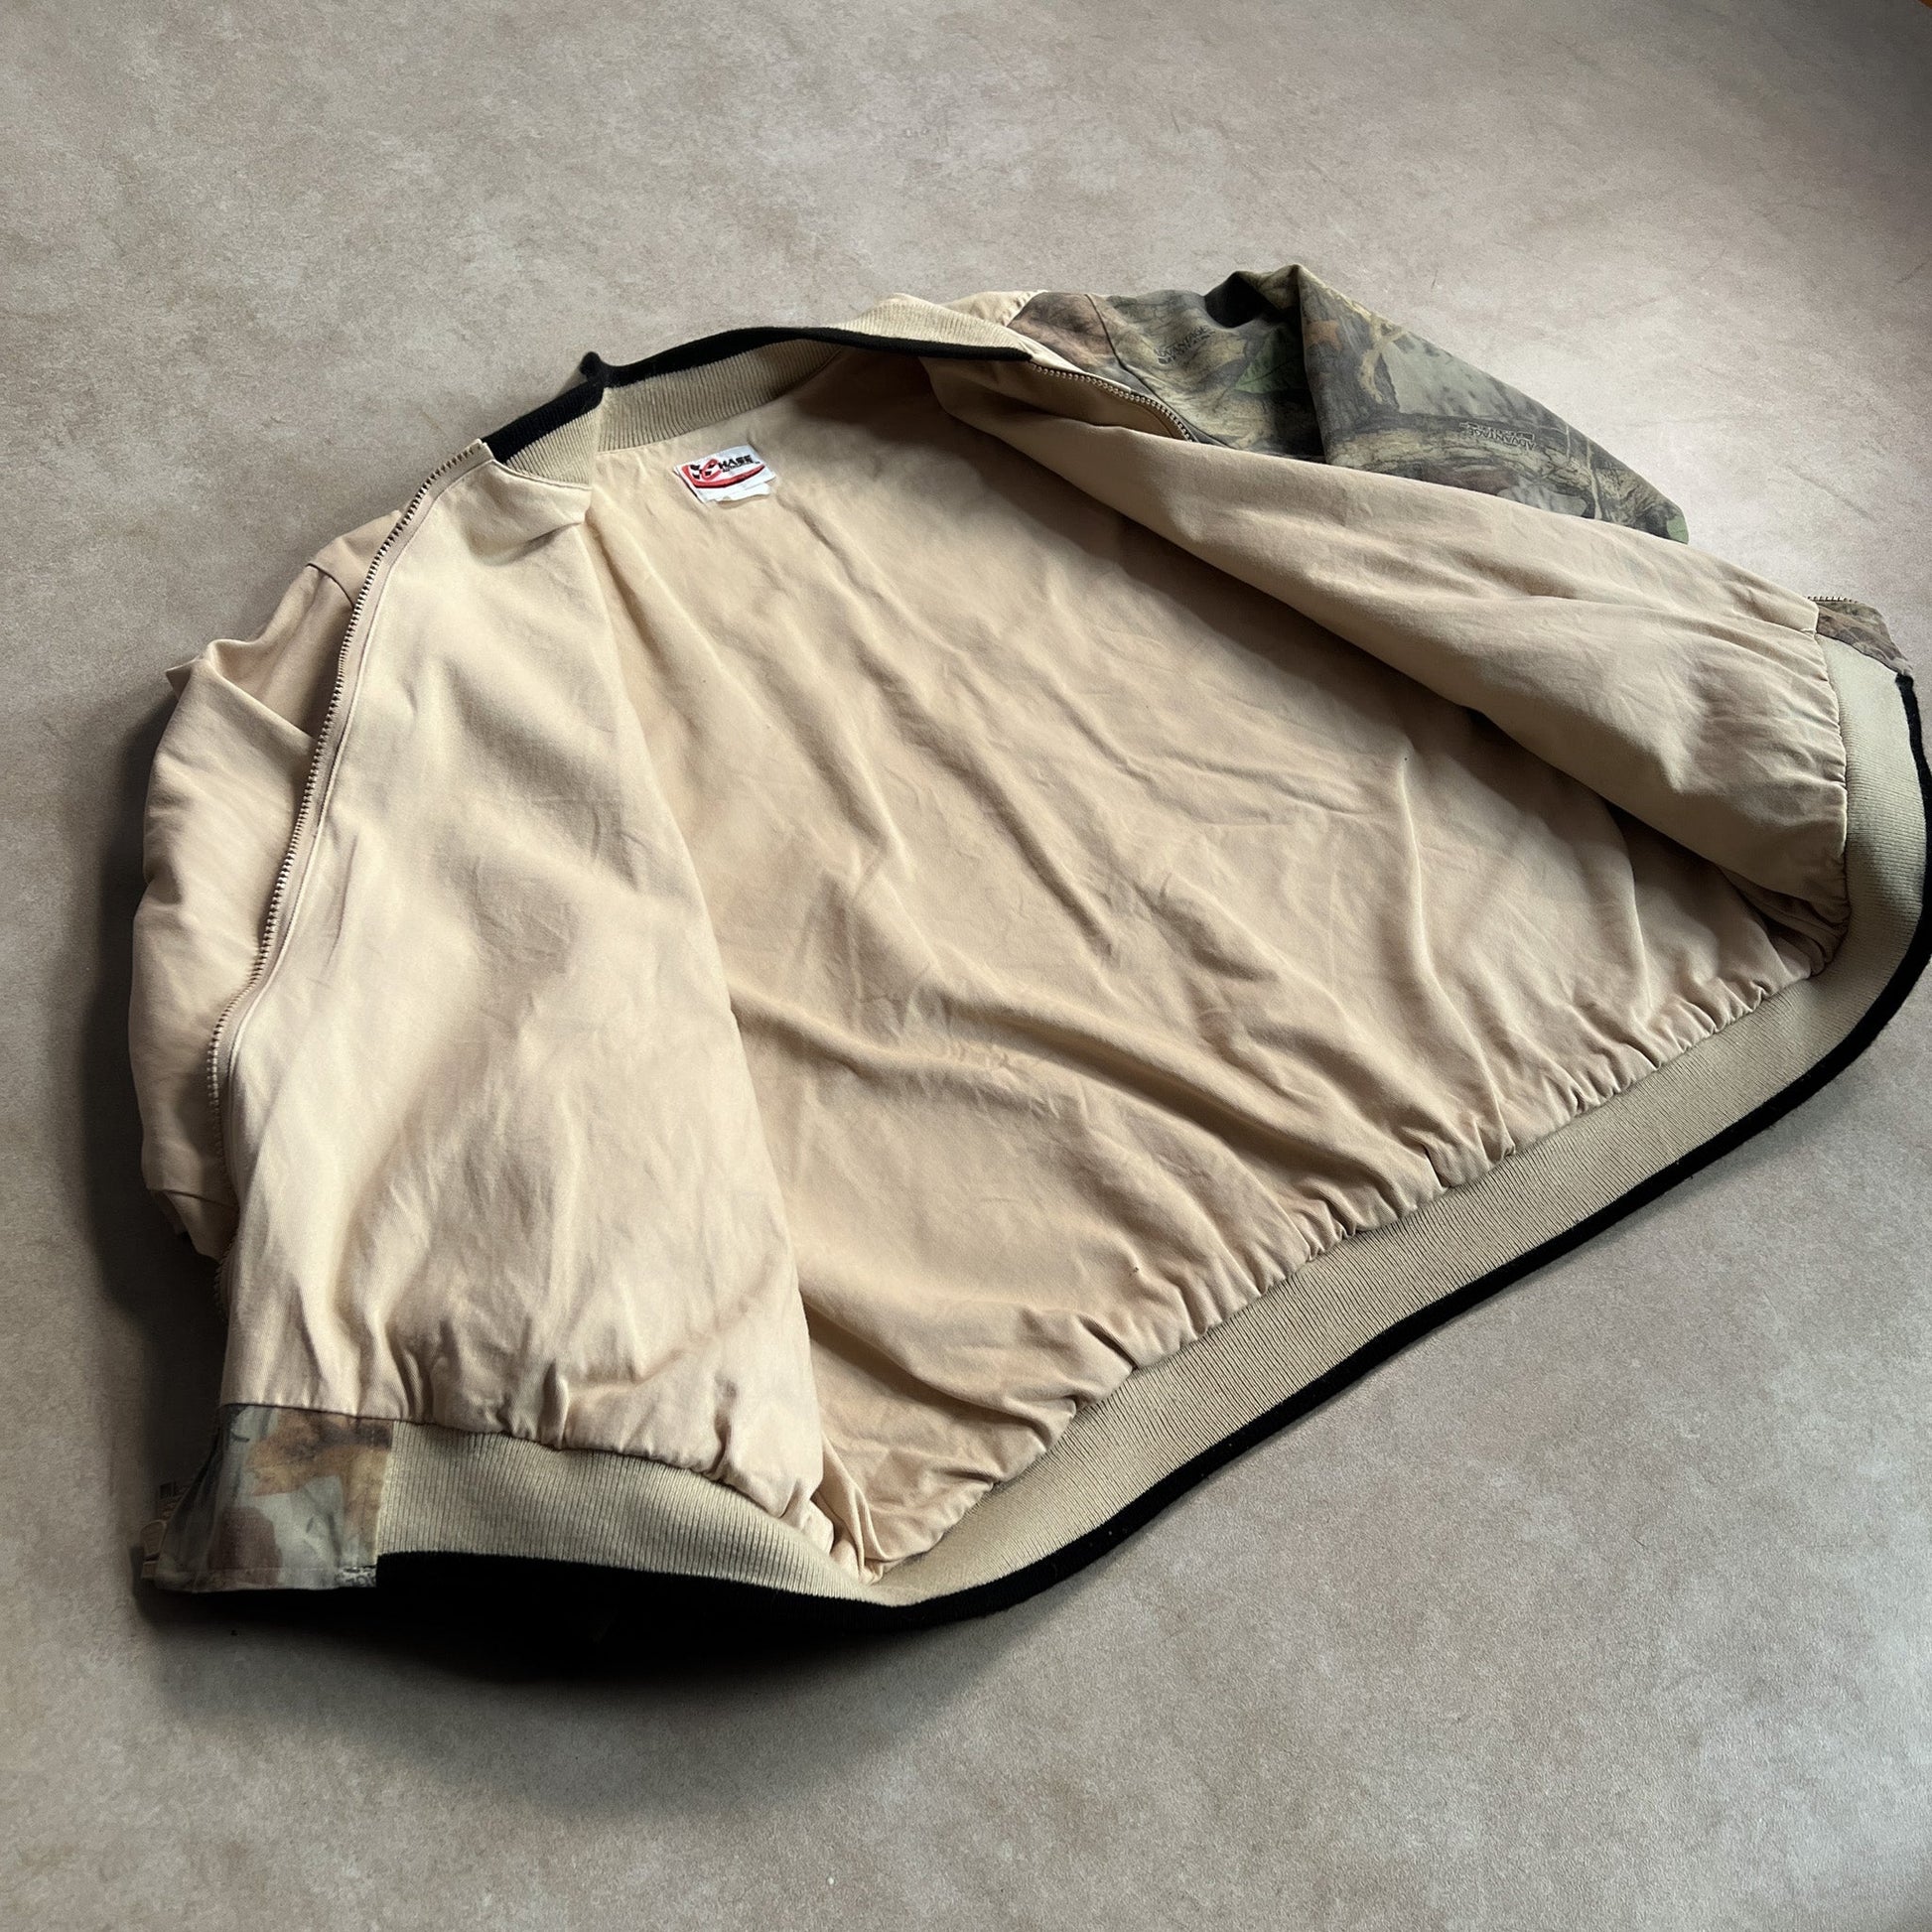 2000s Vintage Jeff Gordon 24 Nascar Realtree Jacket - XL sullivansvintage